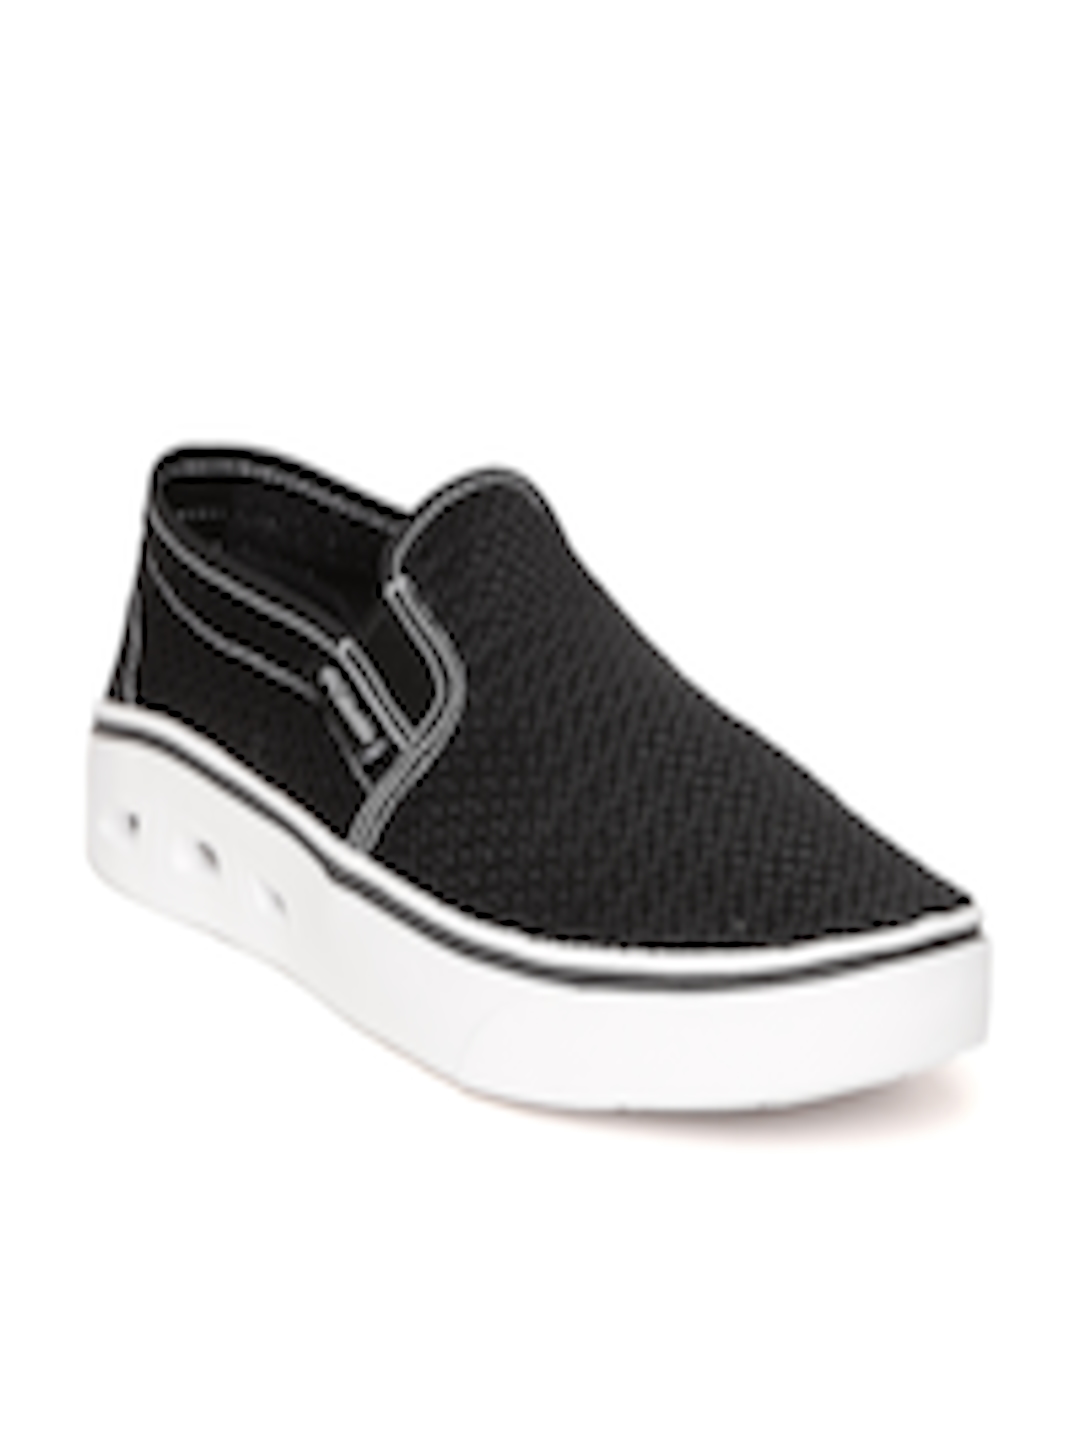 Buy Columbia Men Black Slip On Sneakers - Casual Shoes for Men 2612677 ...